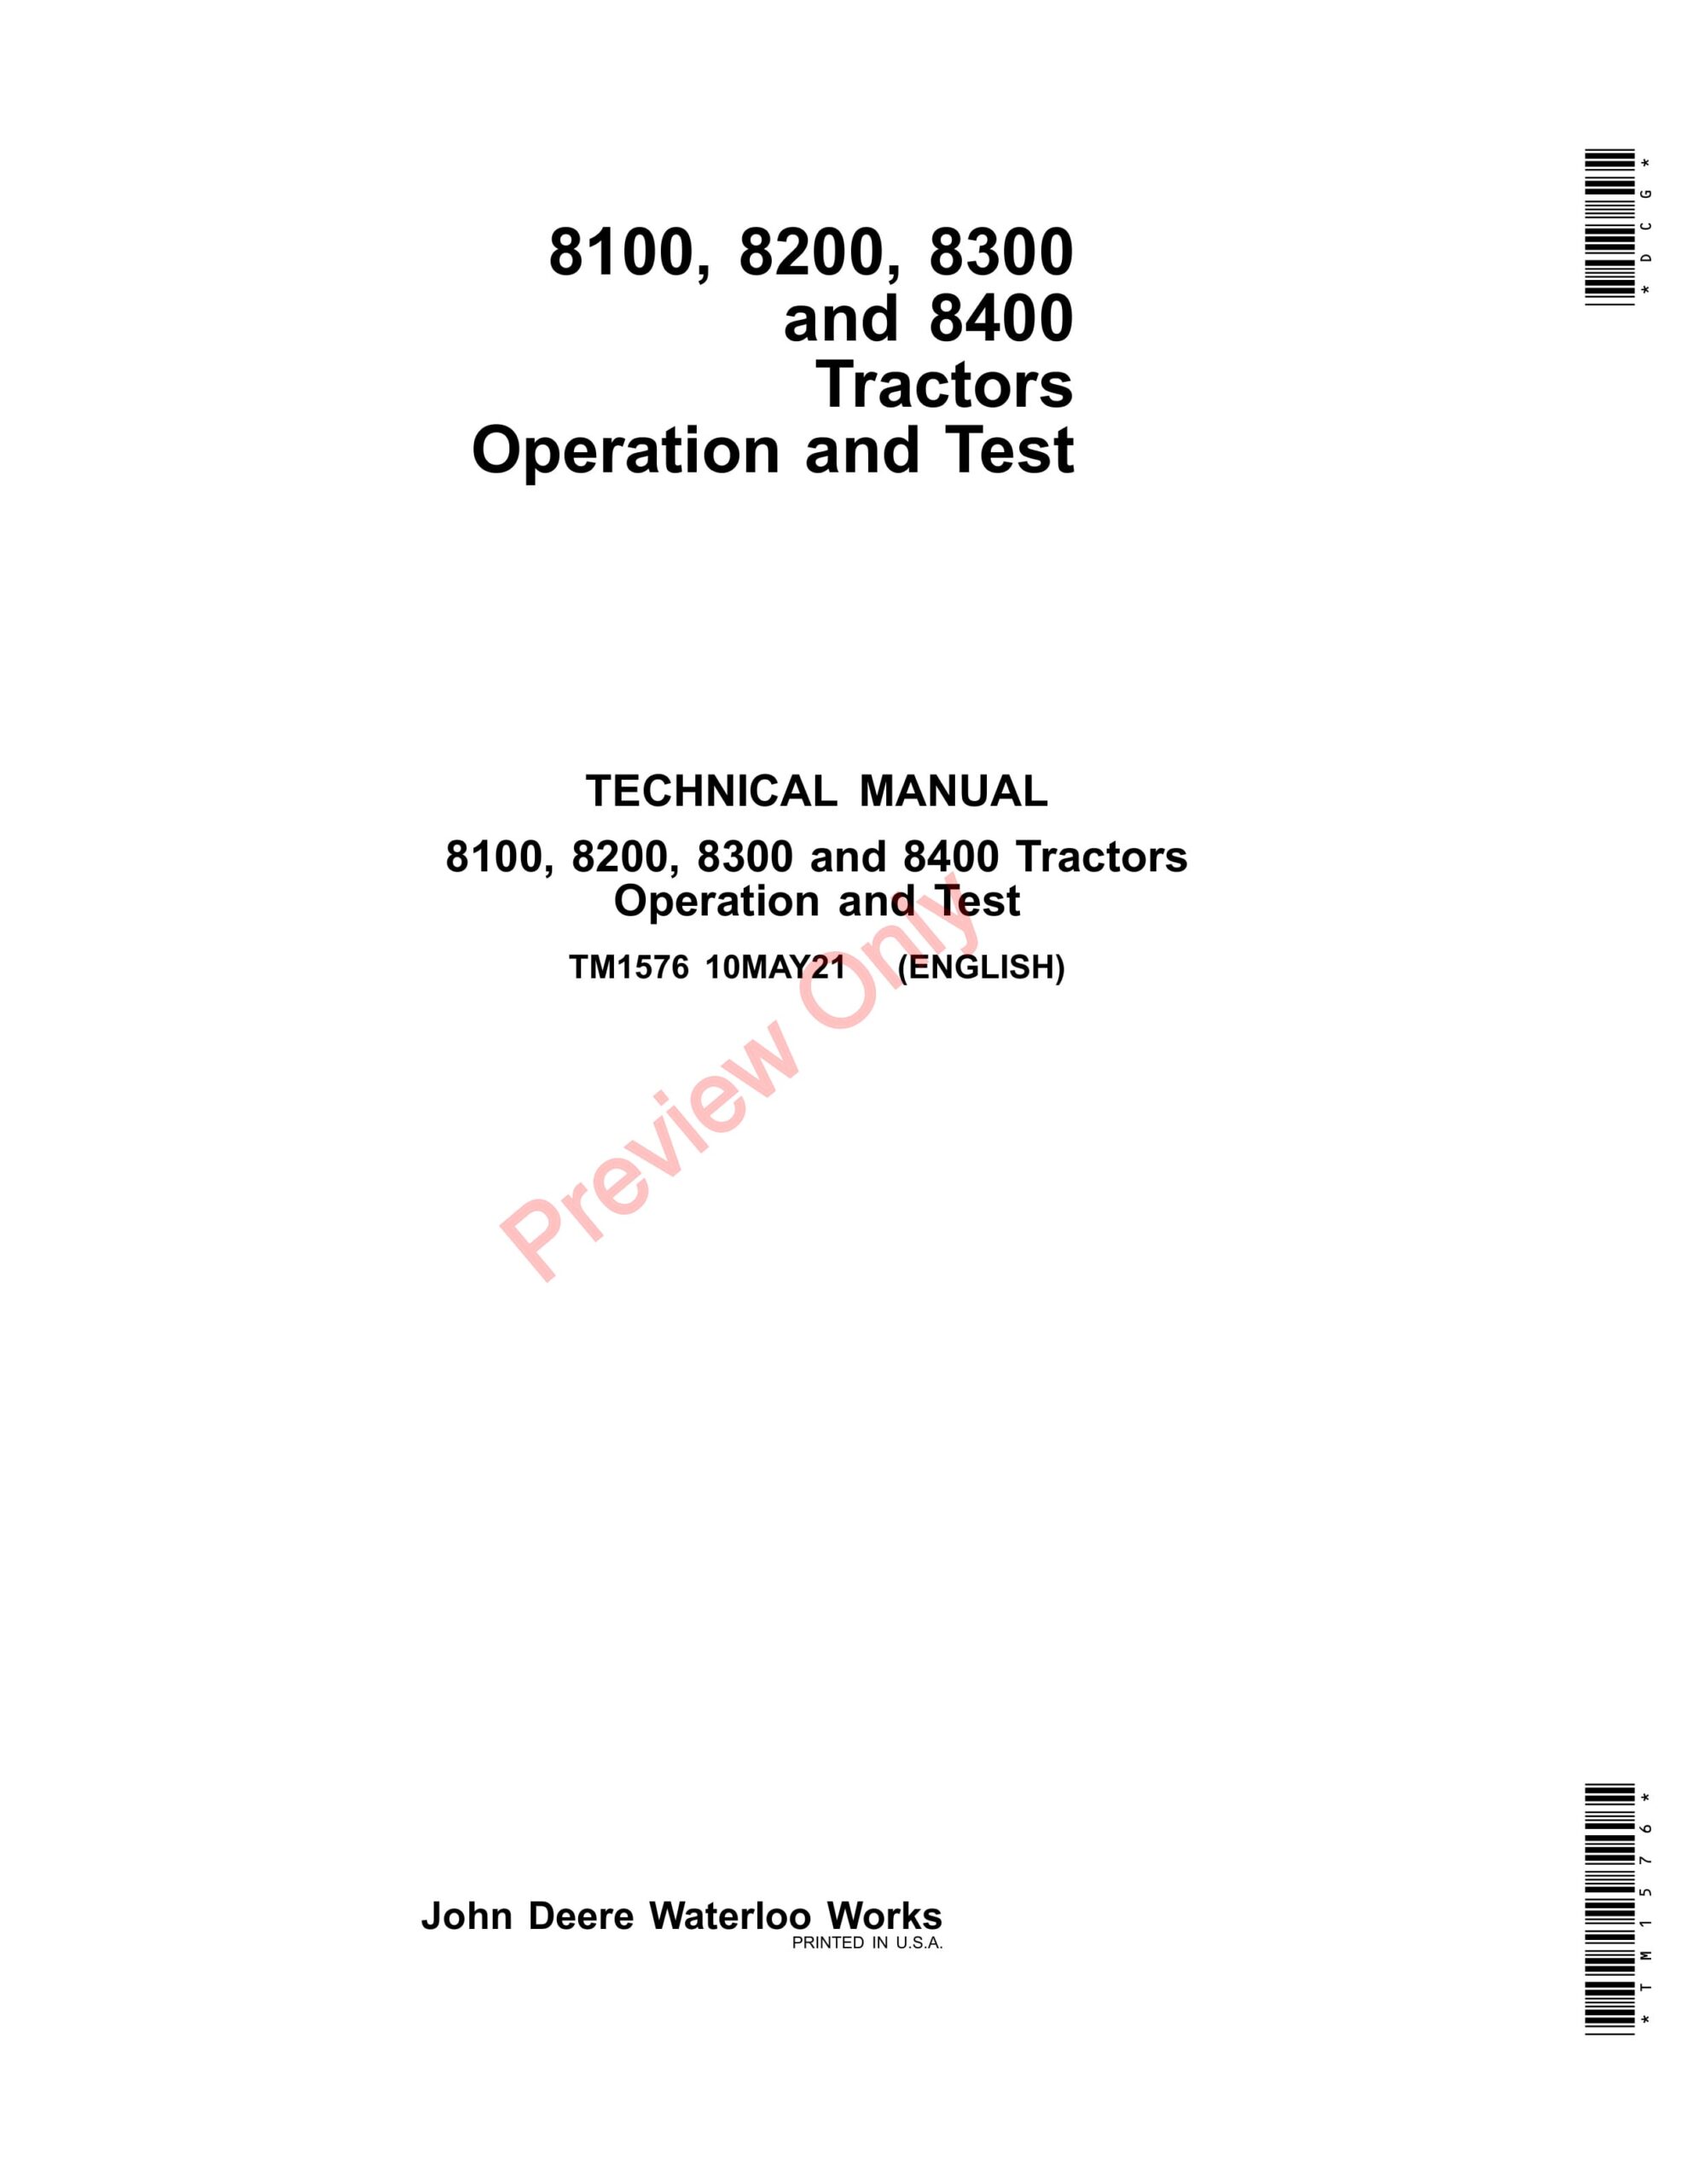 John Deere 8100, 8200, 8300 and 8400 Tractors Technical Manual TM1576 10MAY21-1